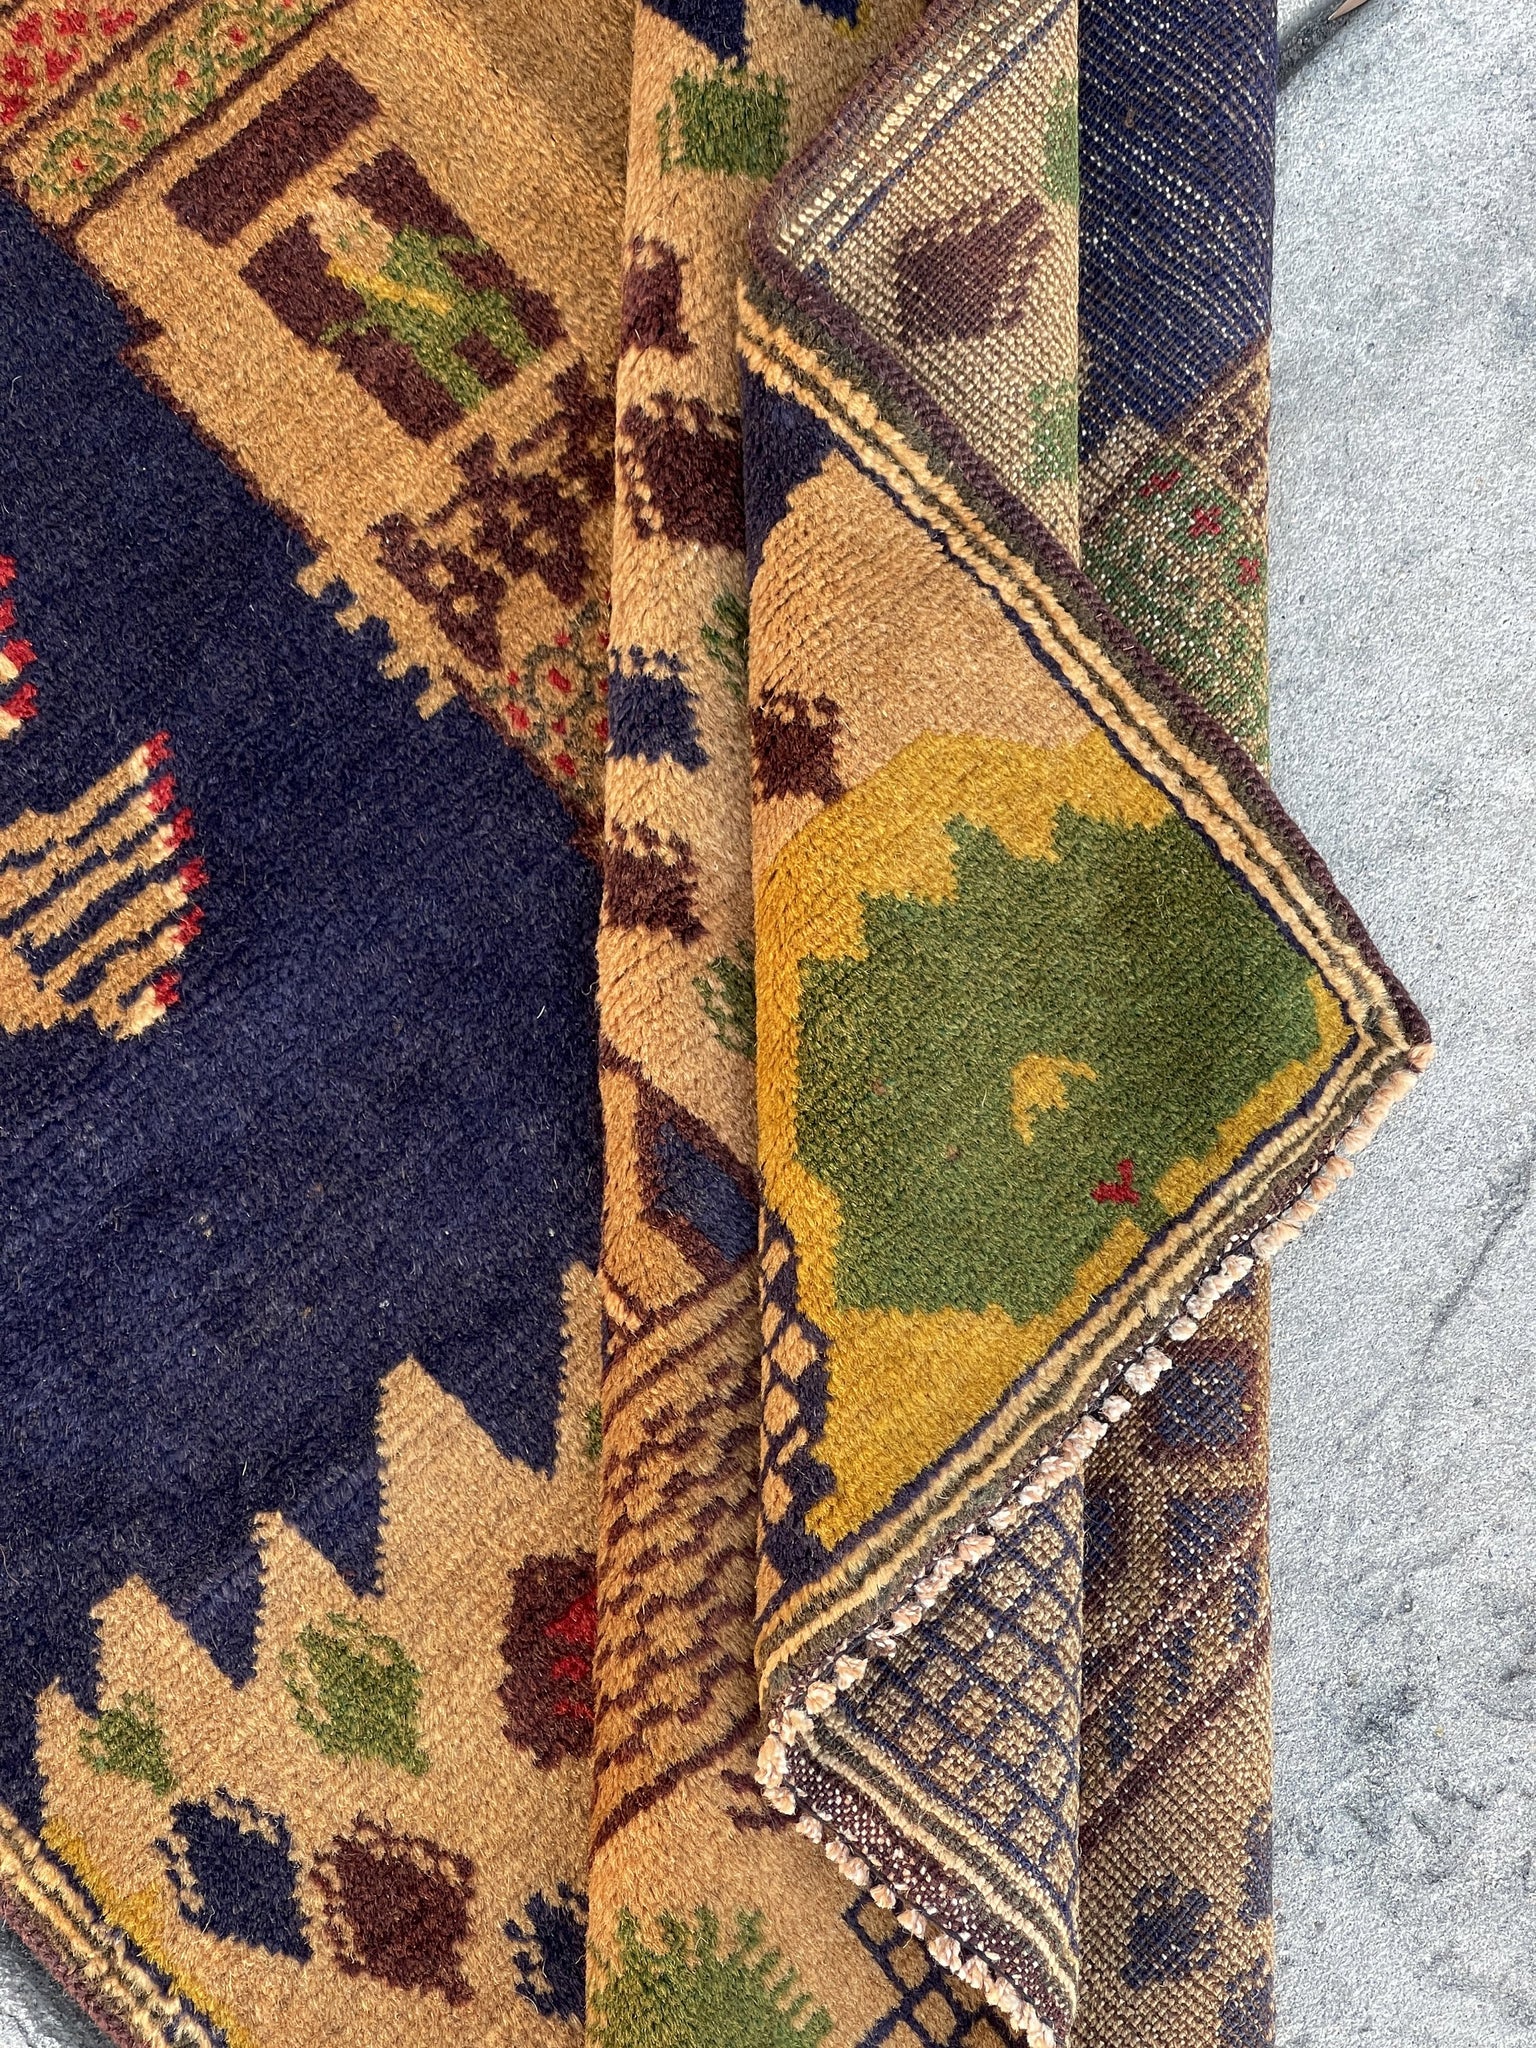 3x5 (90x150) Handmade Vintage Afghan Pictorial Rug | Navy Blue Gold Red Tan Green| Nomadic Baluch Boho Bohemian Tribal Turkish Moroccan Wool